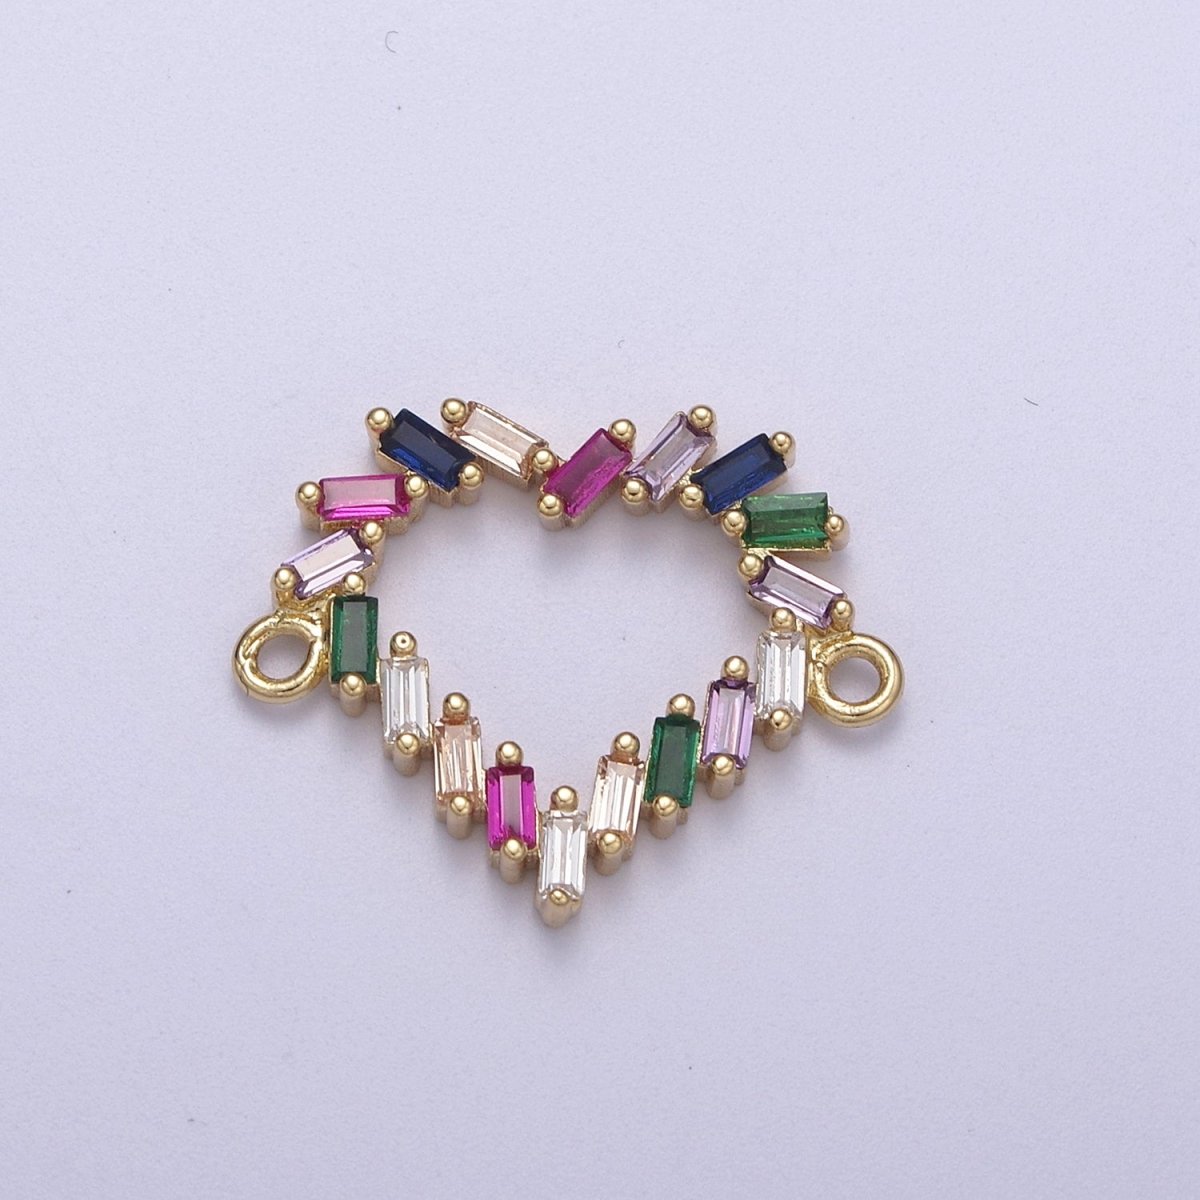 Mini Colorful Baguette Cz Heart Charm Connector for Bracelet Necklace Link Connector F-107 - DLUXCA